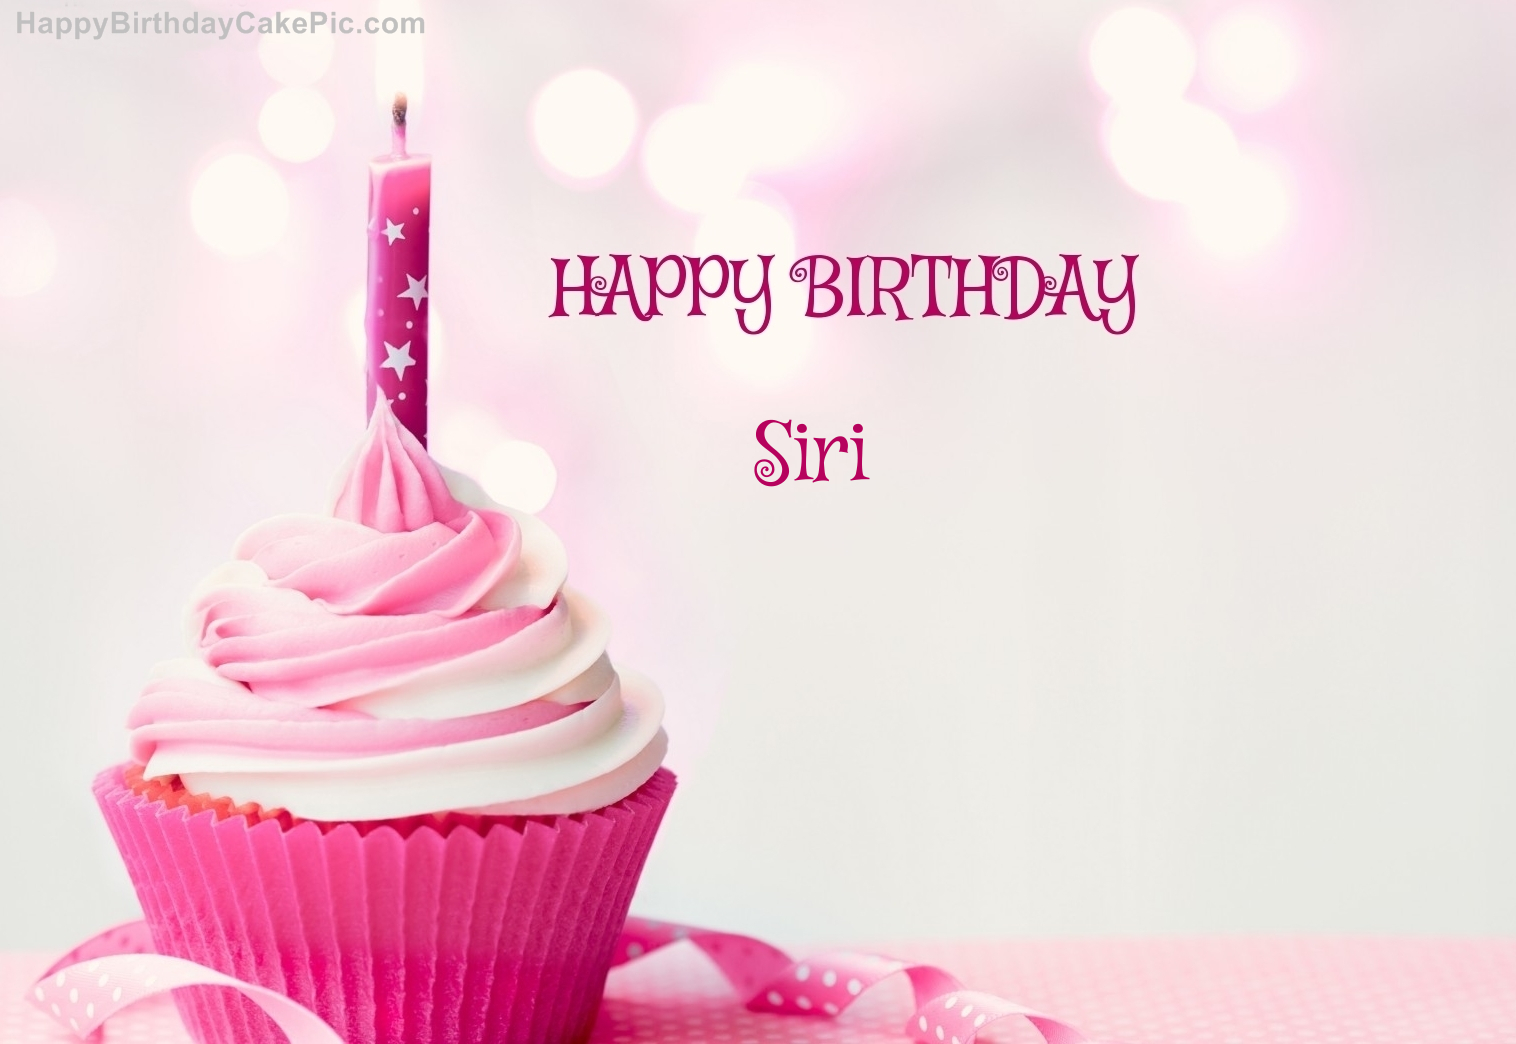 Happy Birthday Cupcake Candle Pink Cake For Siri